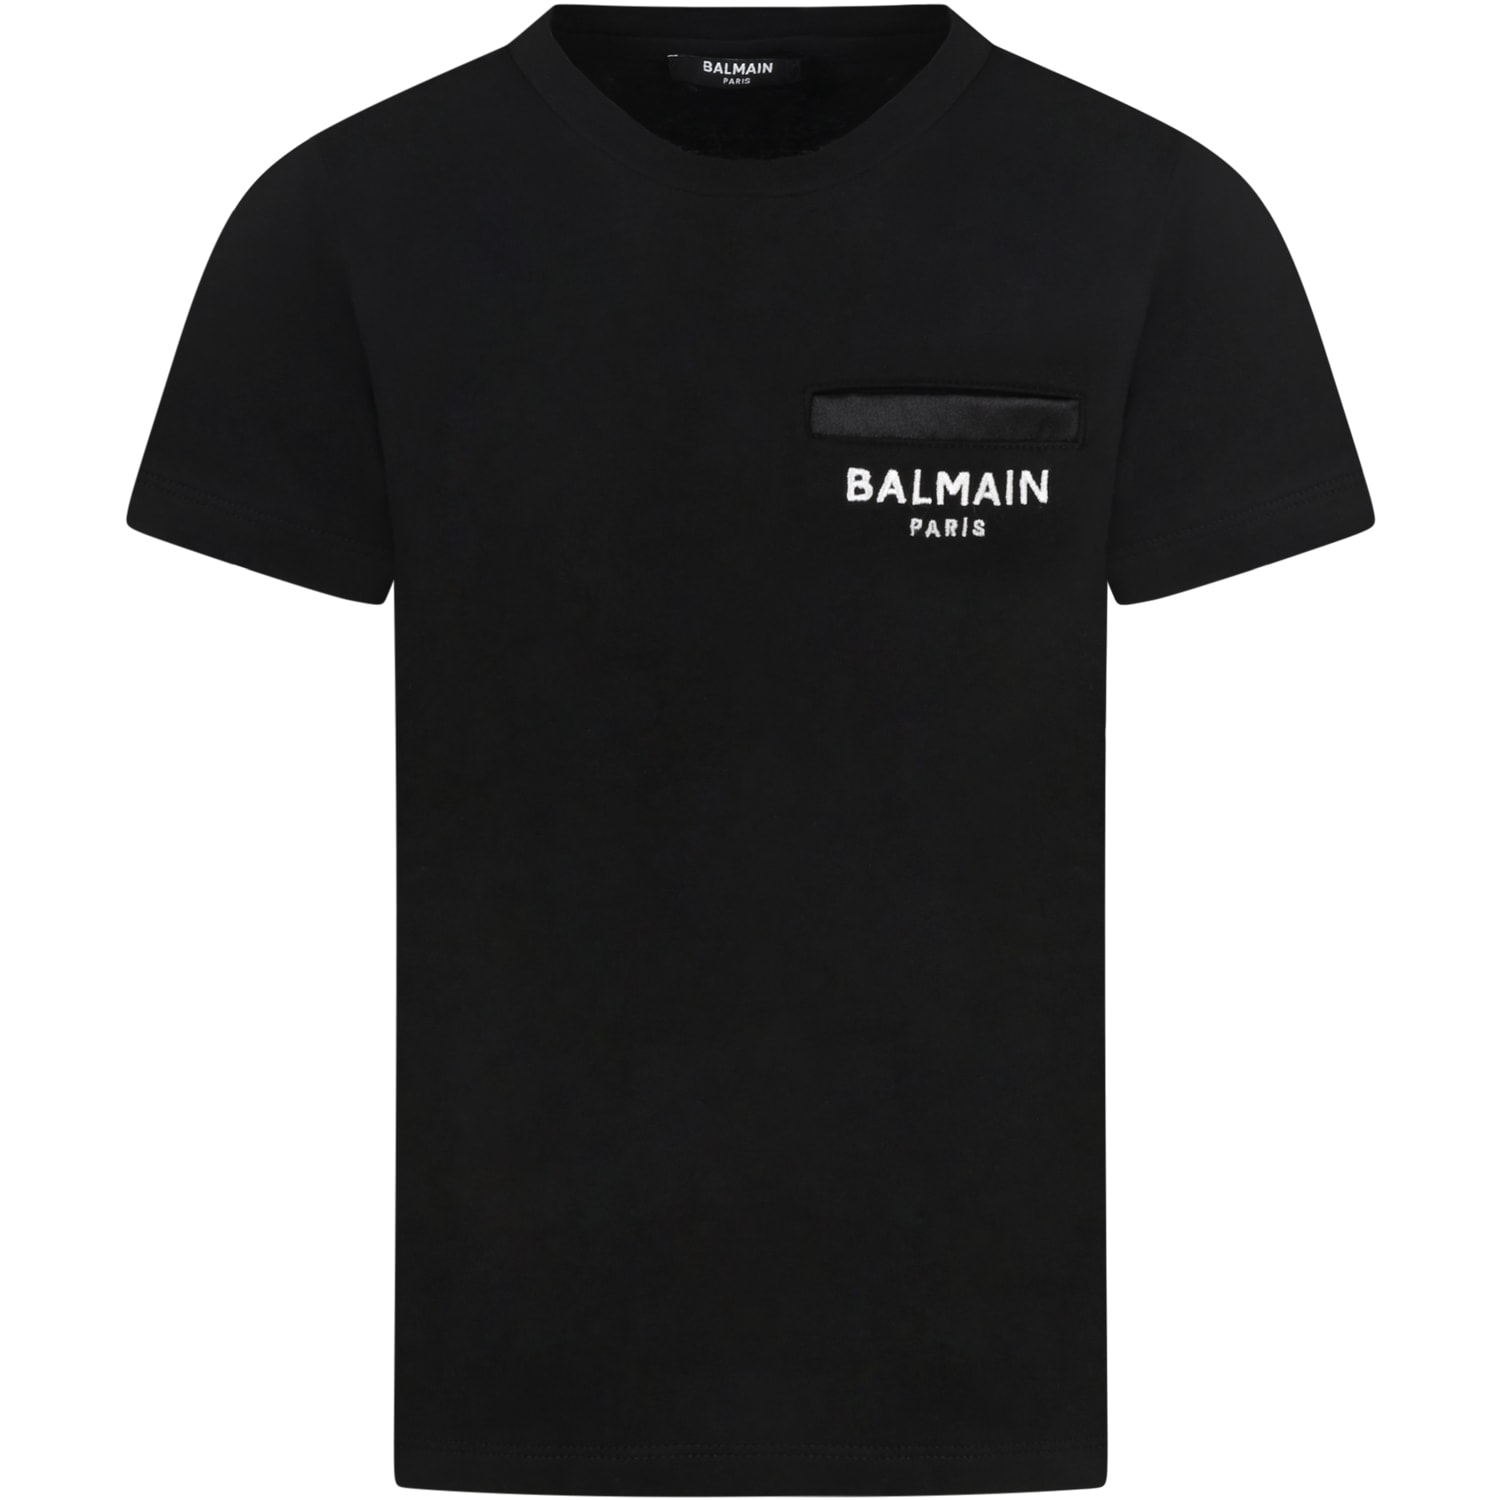 Balmain Black T-shirt For Kids With White Logo